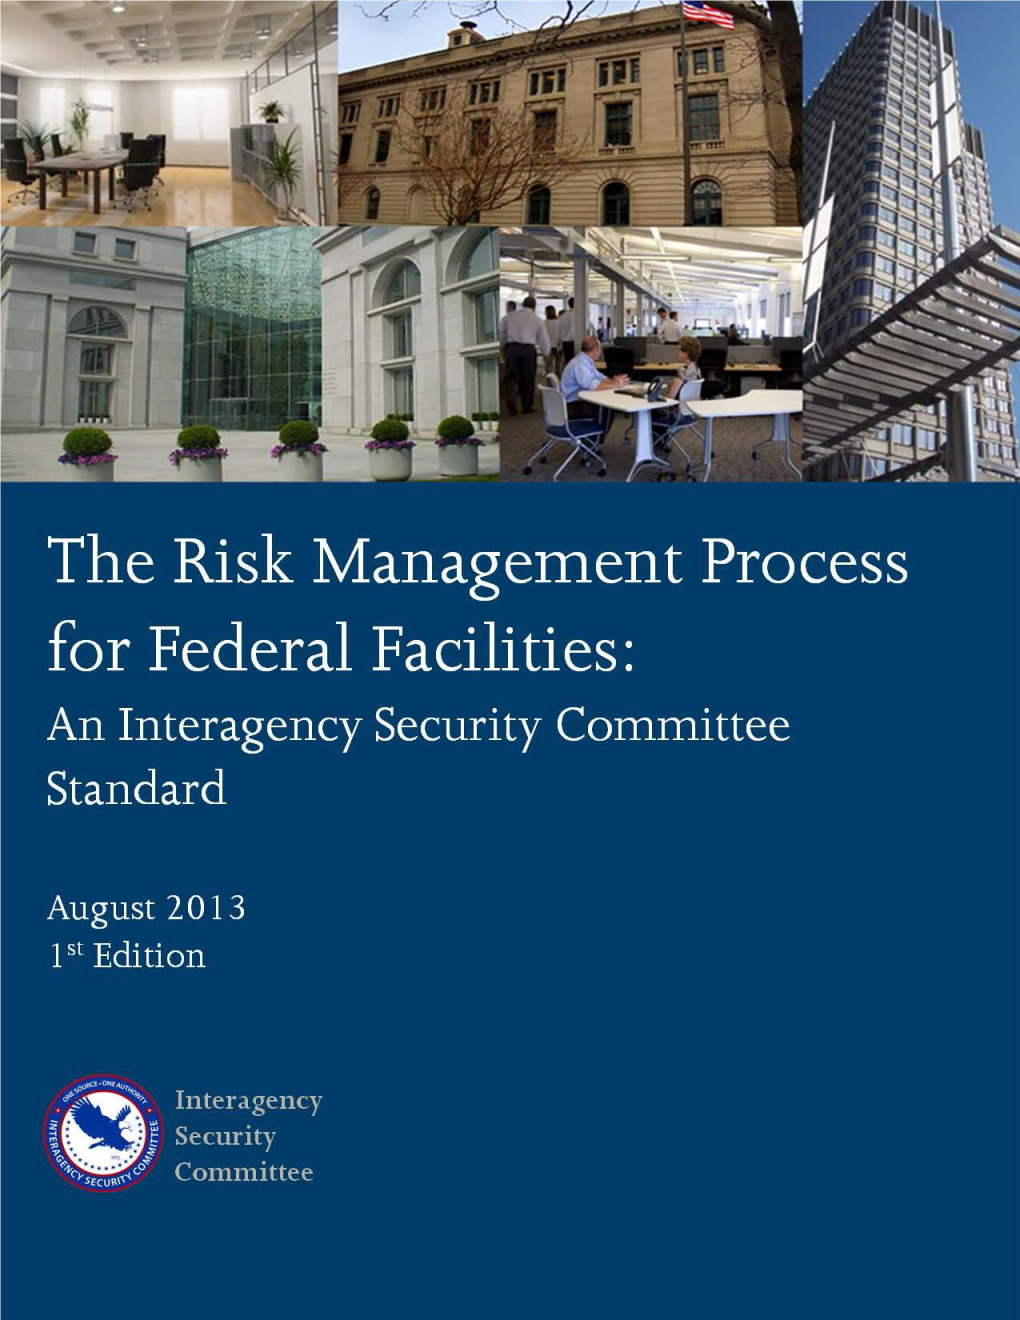 ISC Risk Management Process Contents